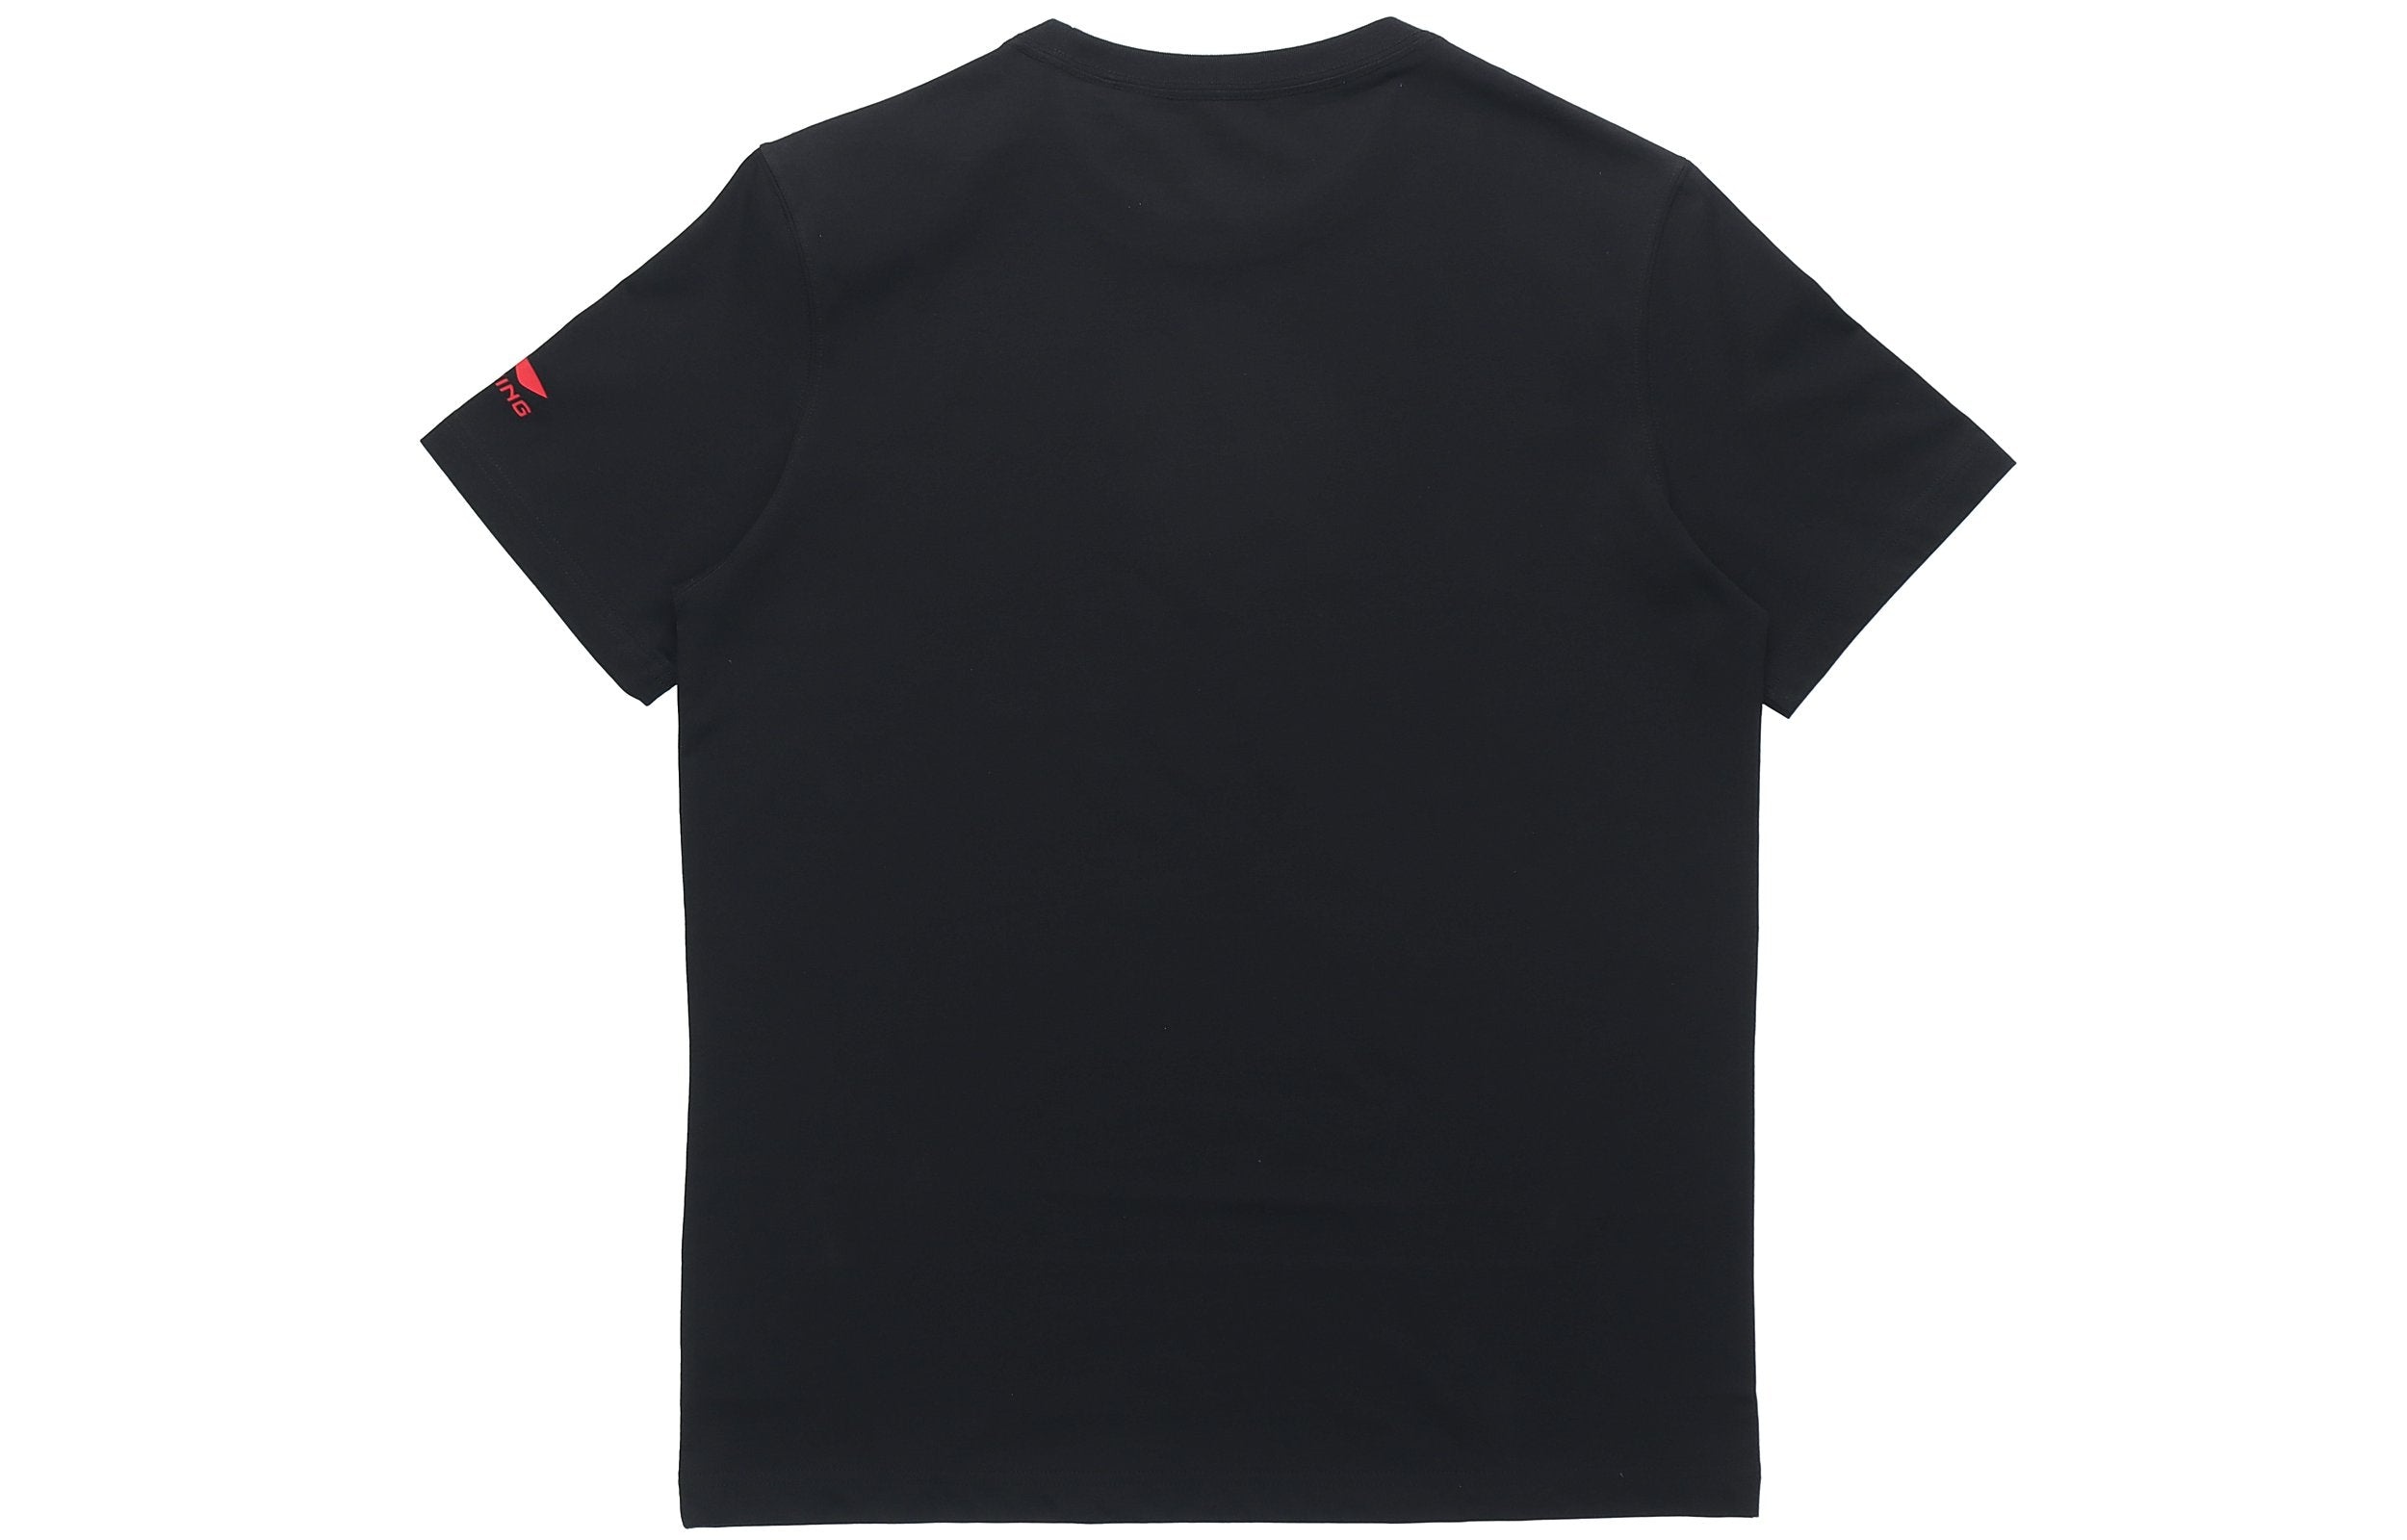 Li-Ning Graphic T-shirt 'Black' AHSRA40-5 - 2